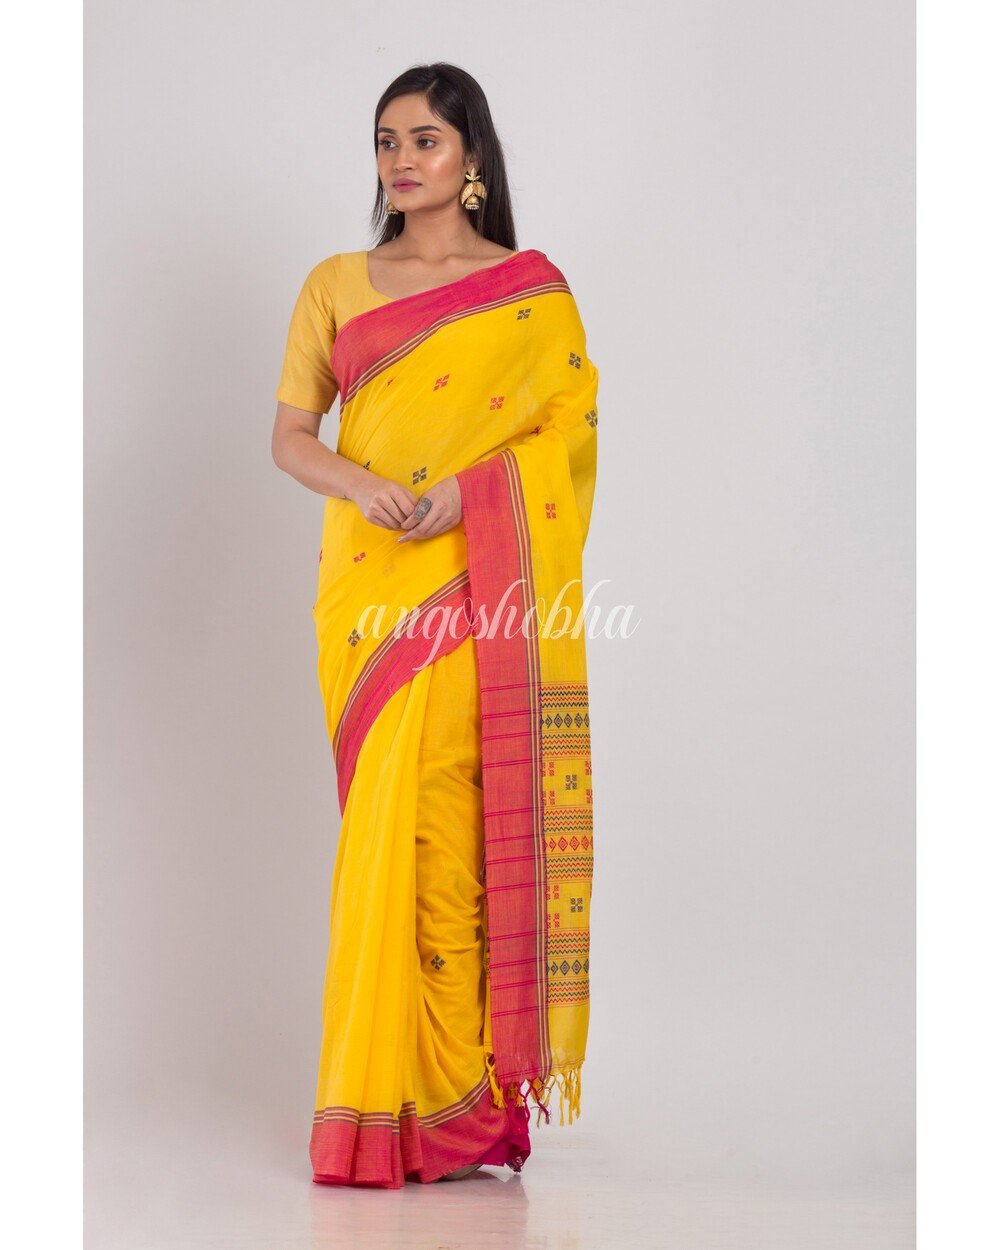 Women's Khadi Cotton Yellow Handloom Saree - Angoshobha